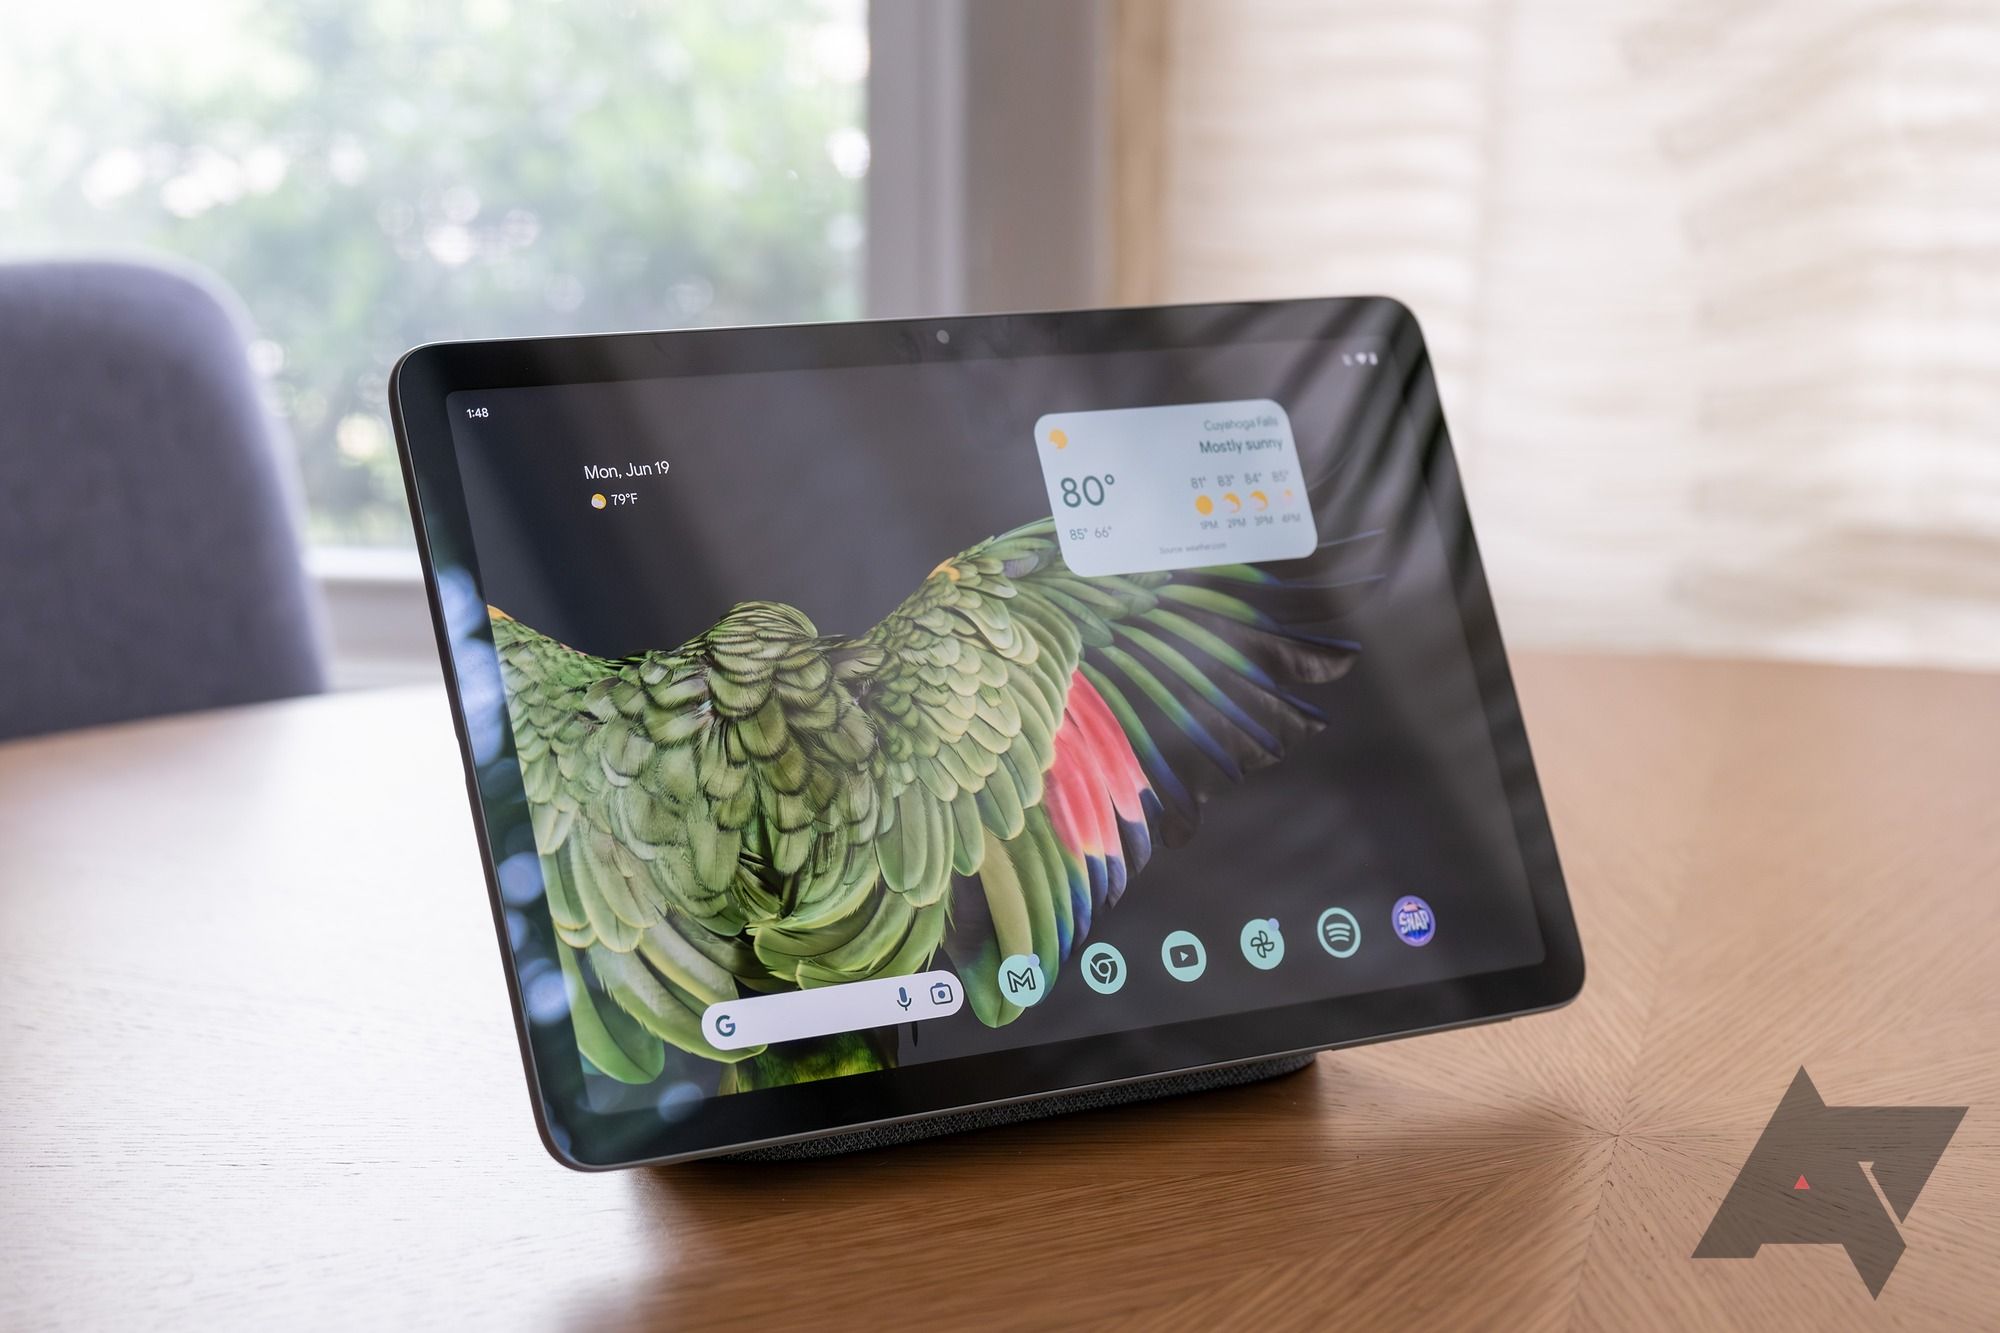 Google Pixel Tablet review: A versatile smart display